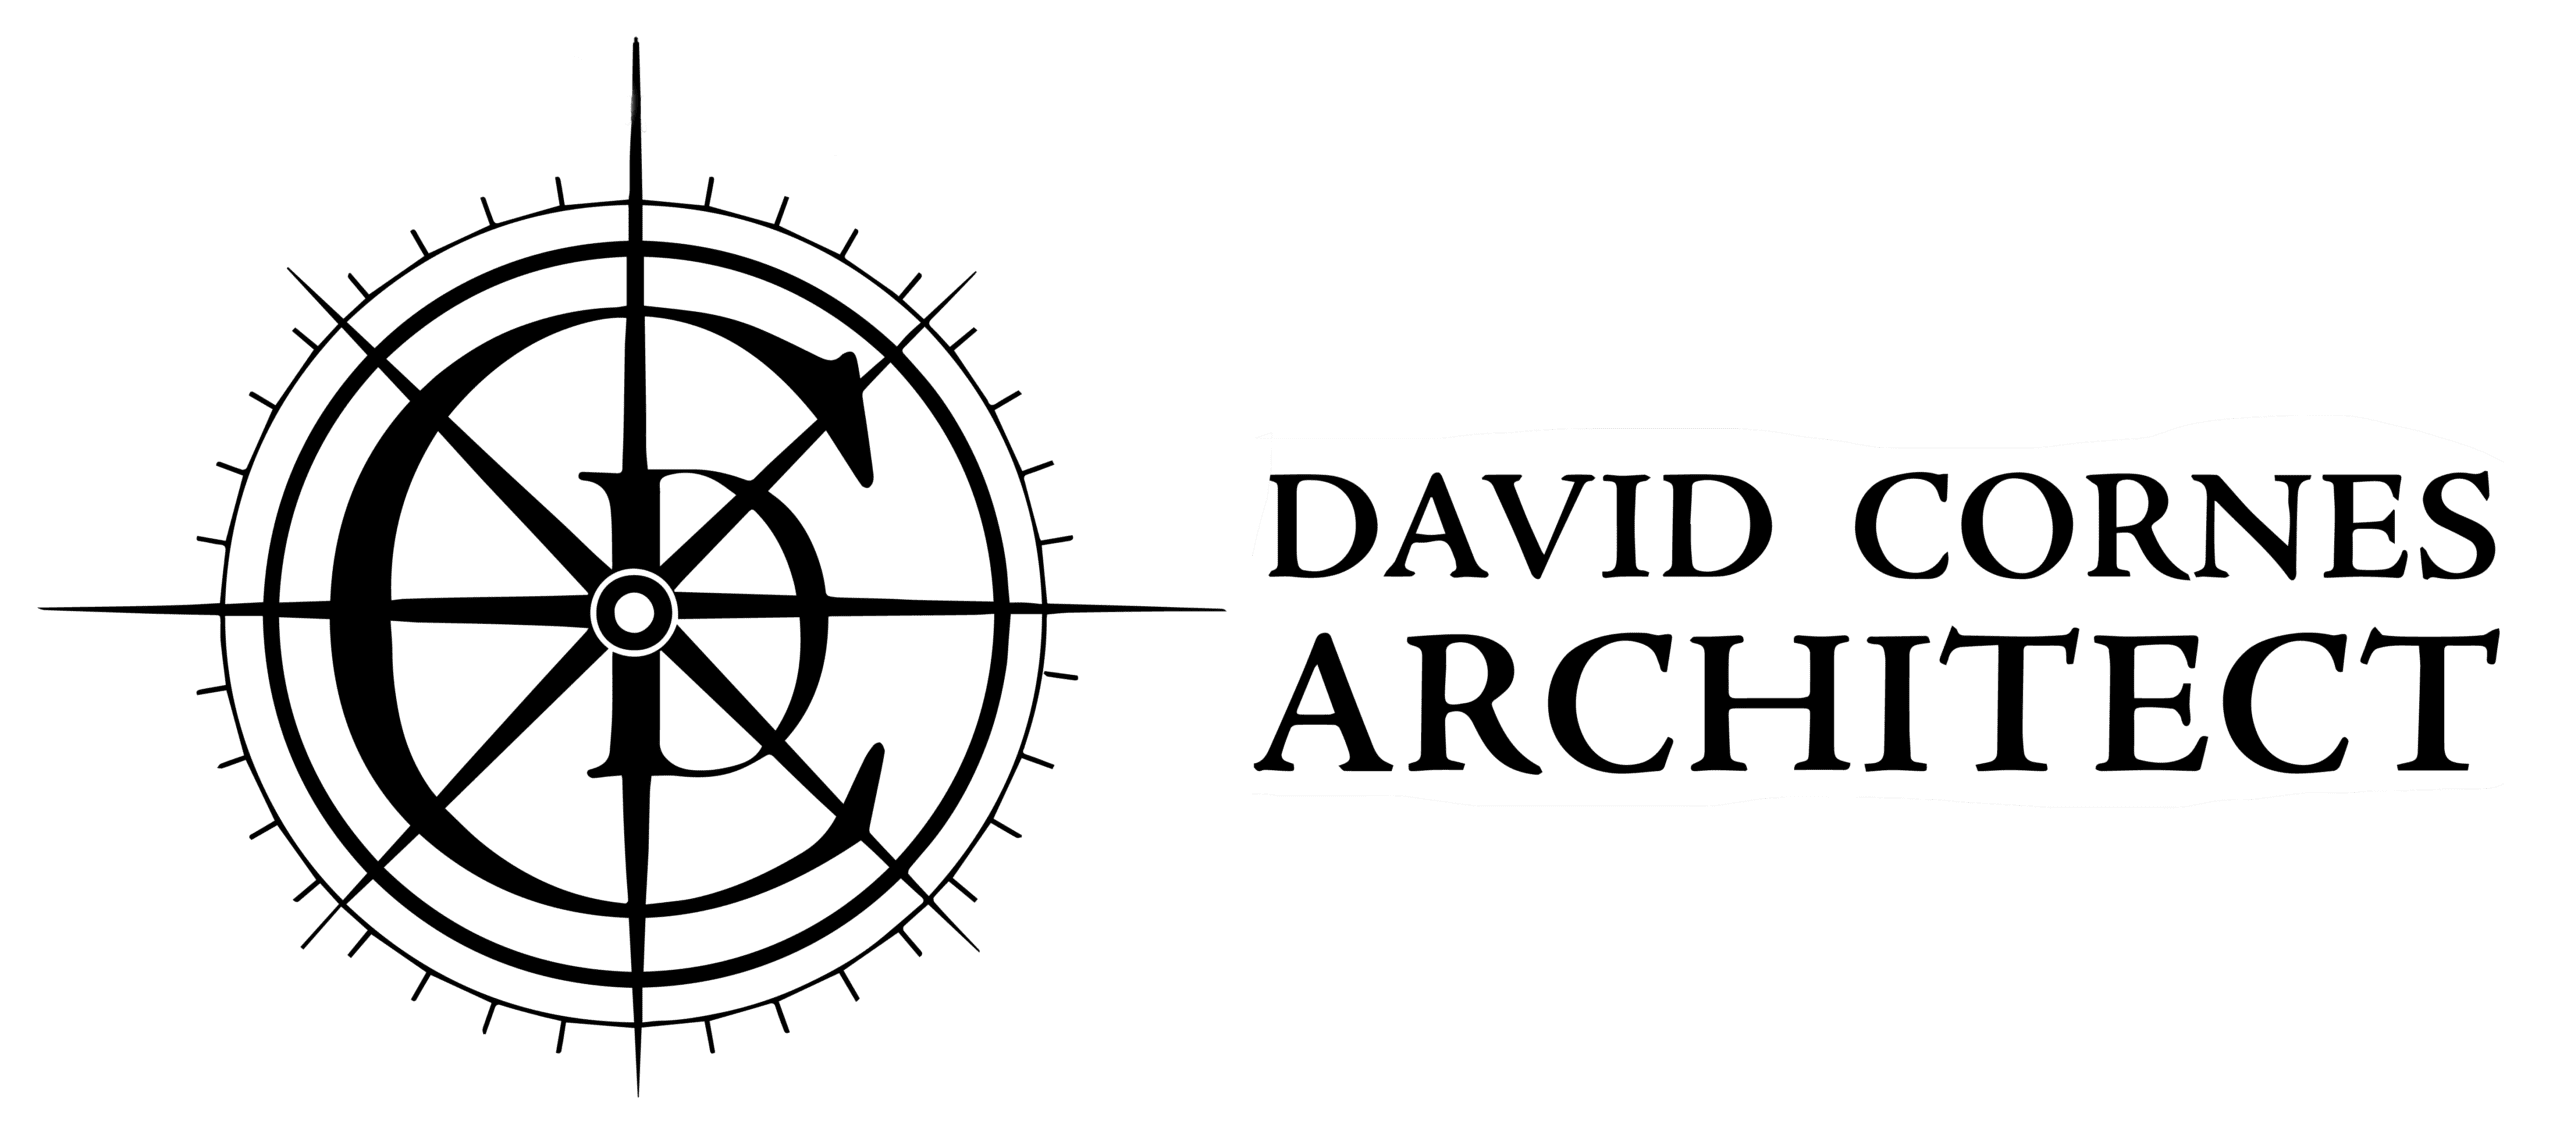 David Cornes Architect